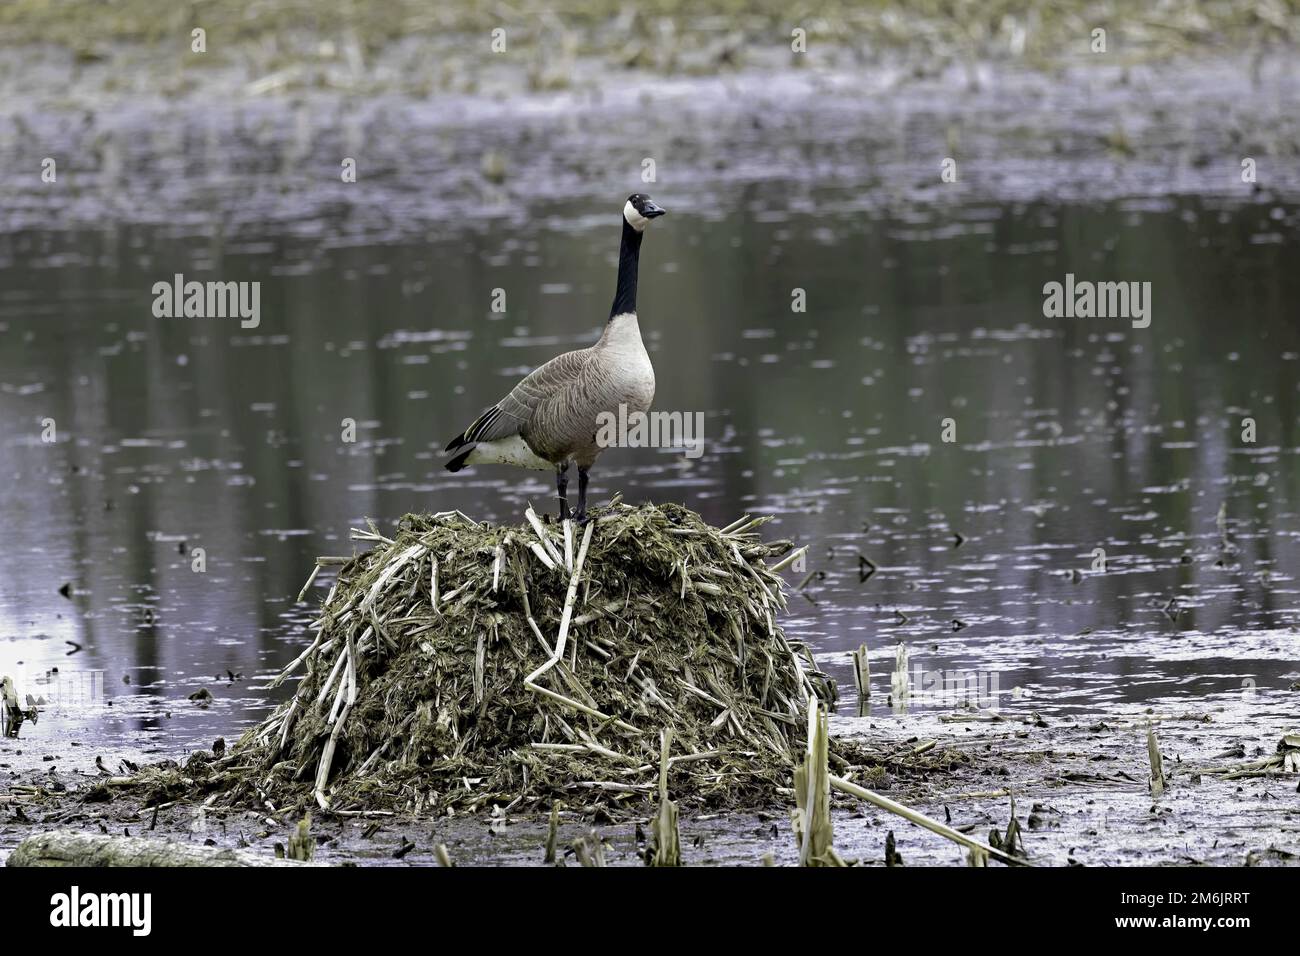 Canada goose (Branta canadensis) in the swamp Stock Photo